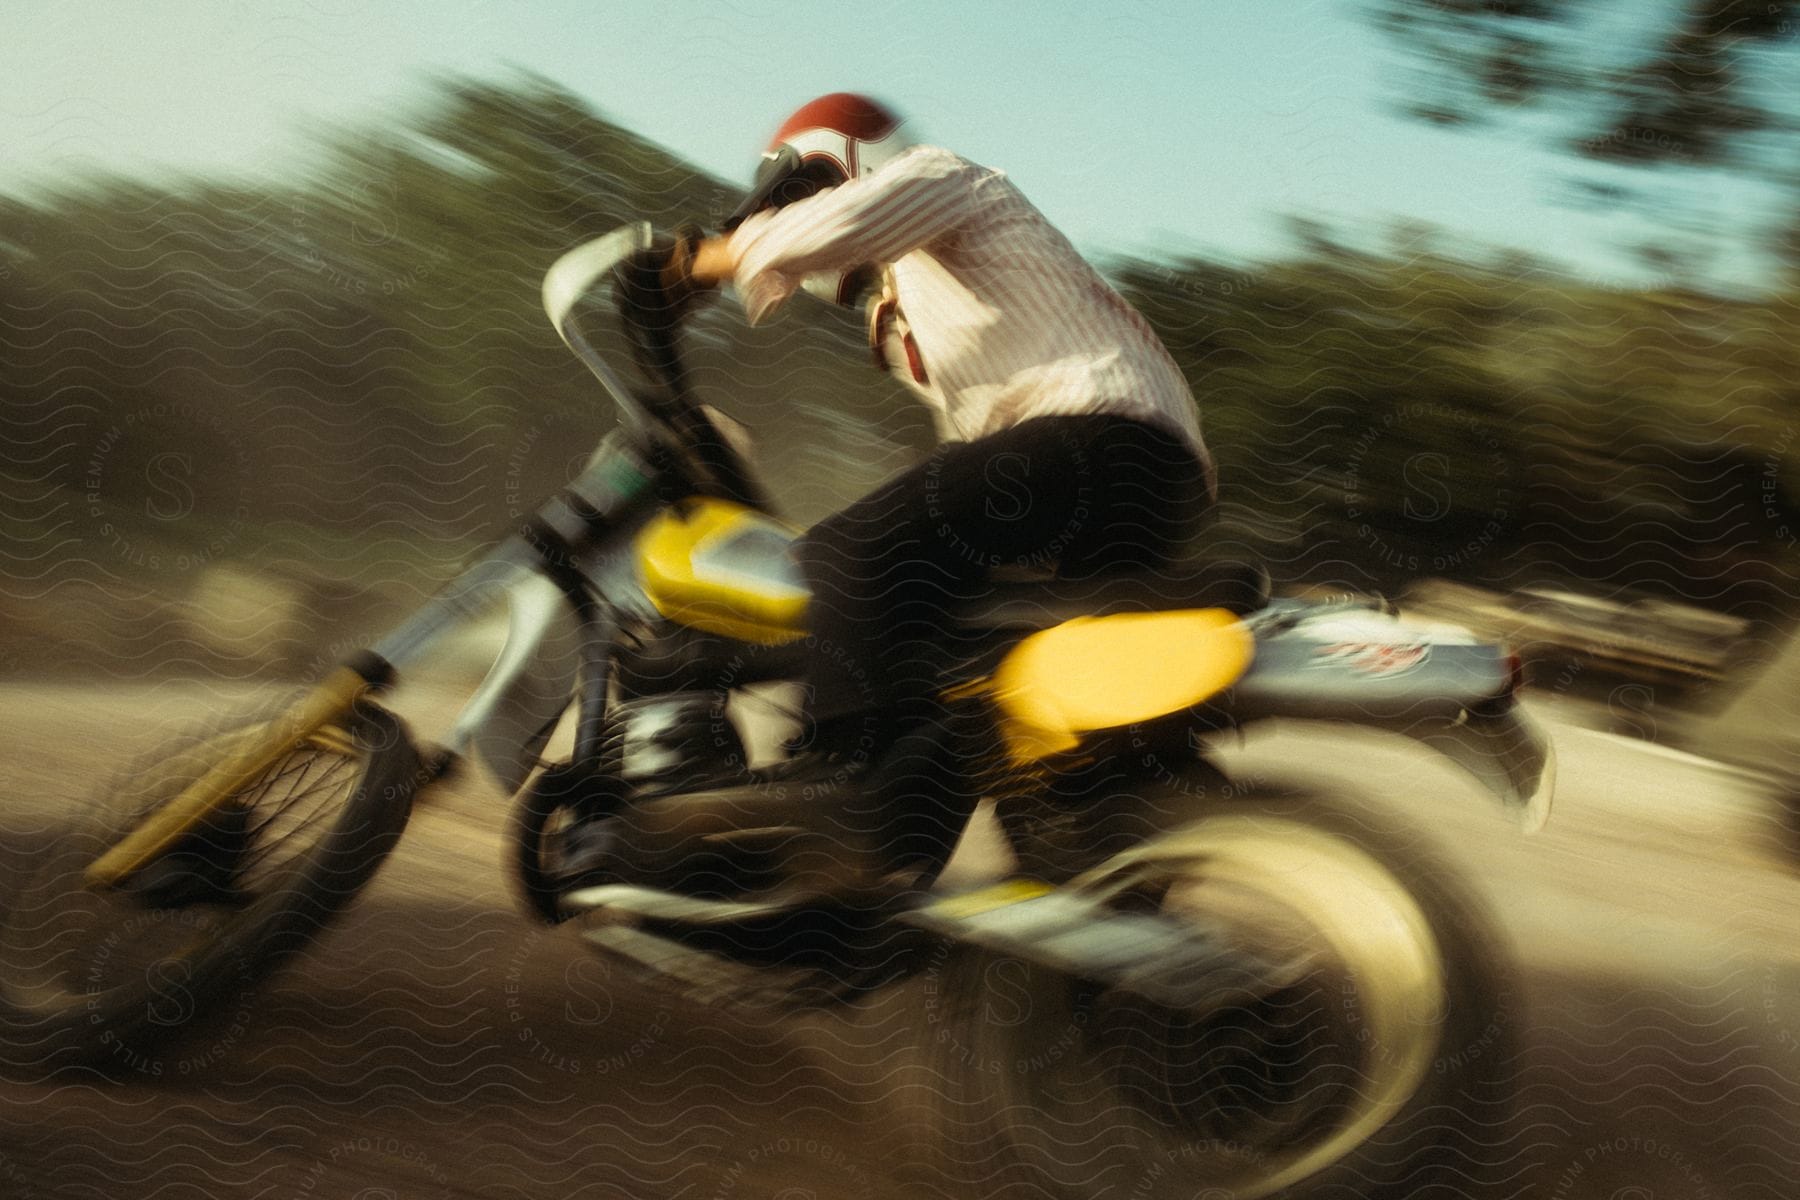 a man rides a motorcycle through a dirt field